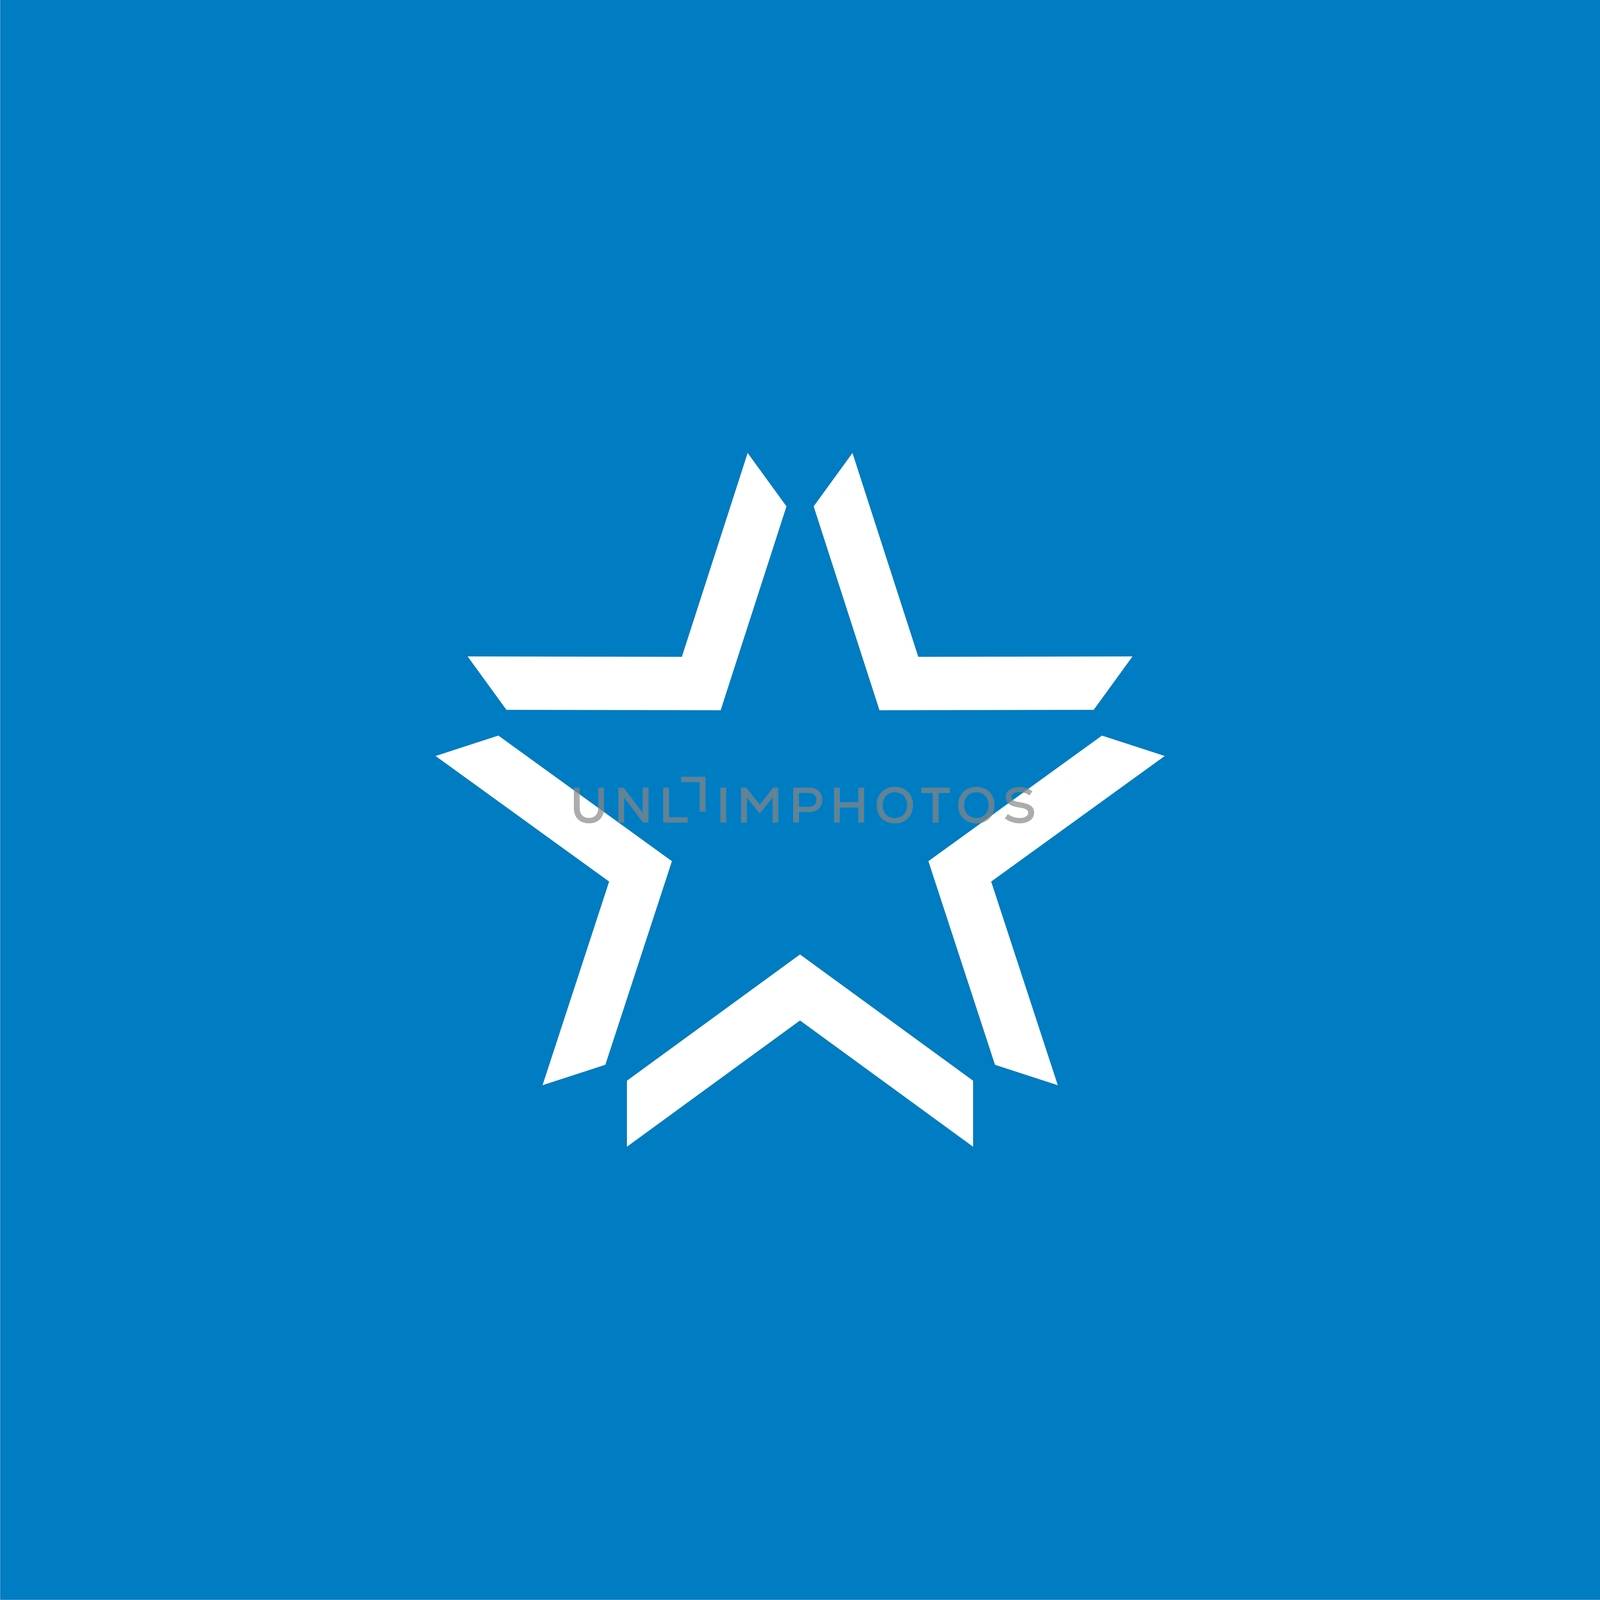 Monochrome Star vector Logo Template Illustration Design EPS 10 by soponyono1